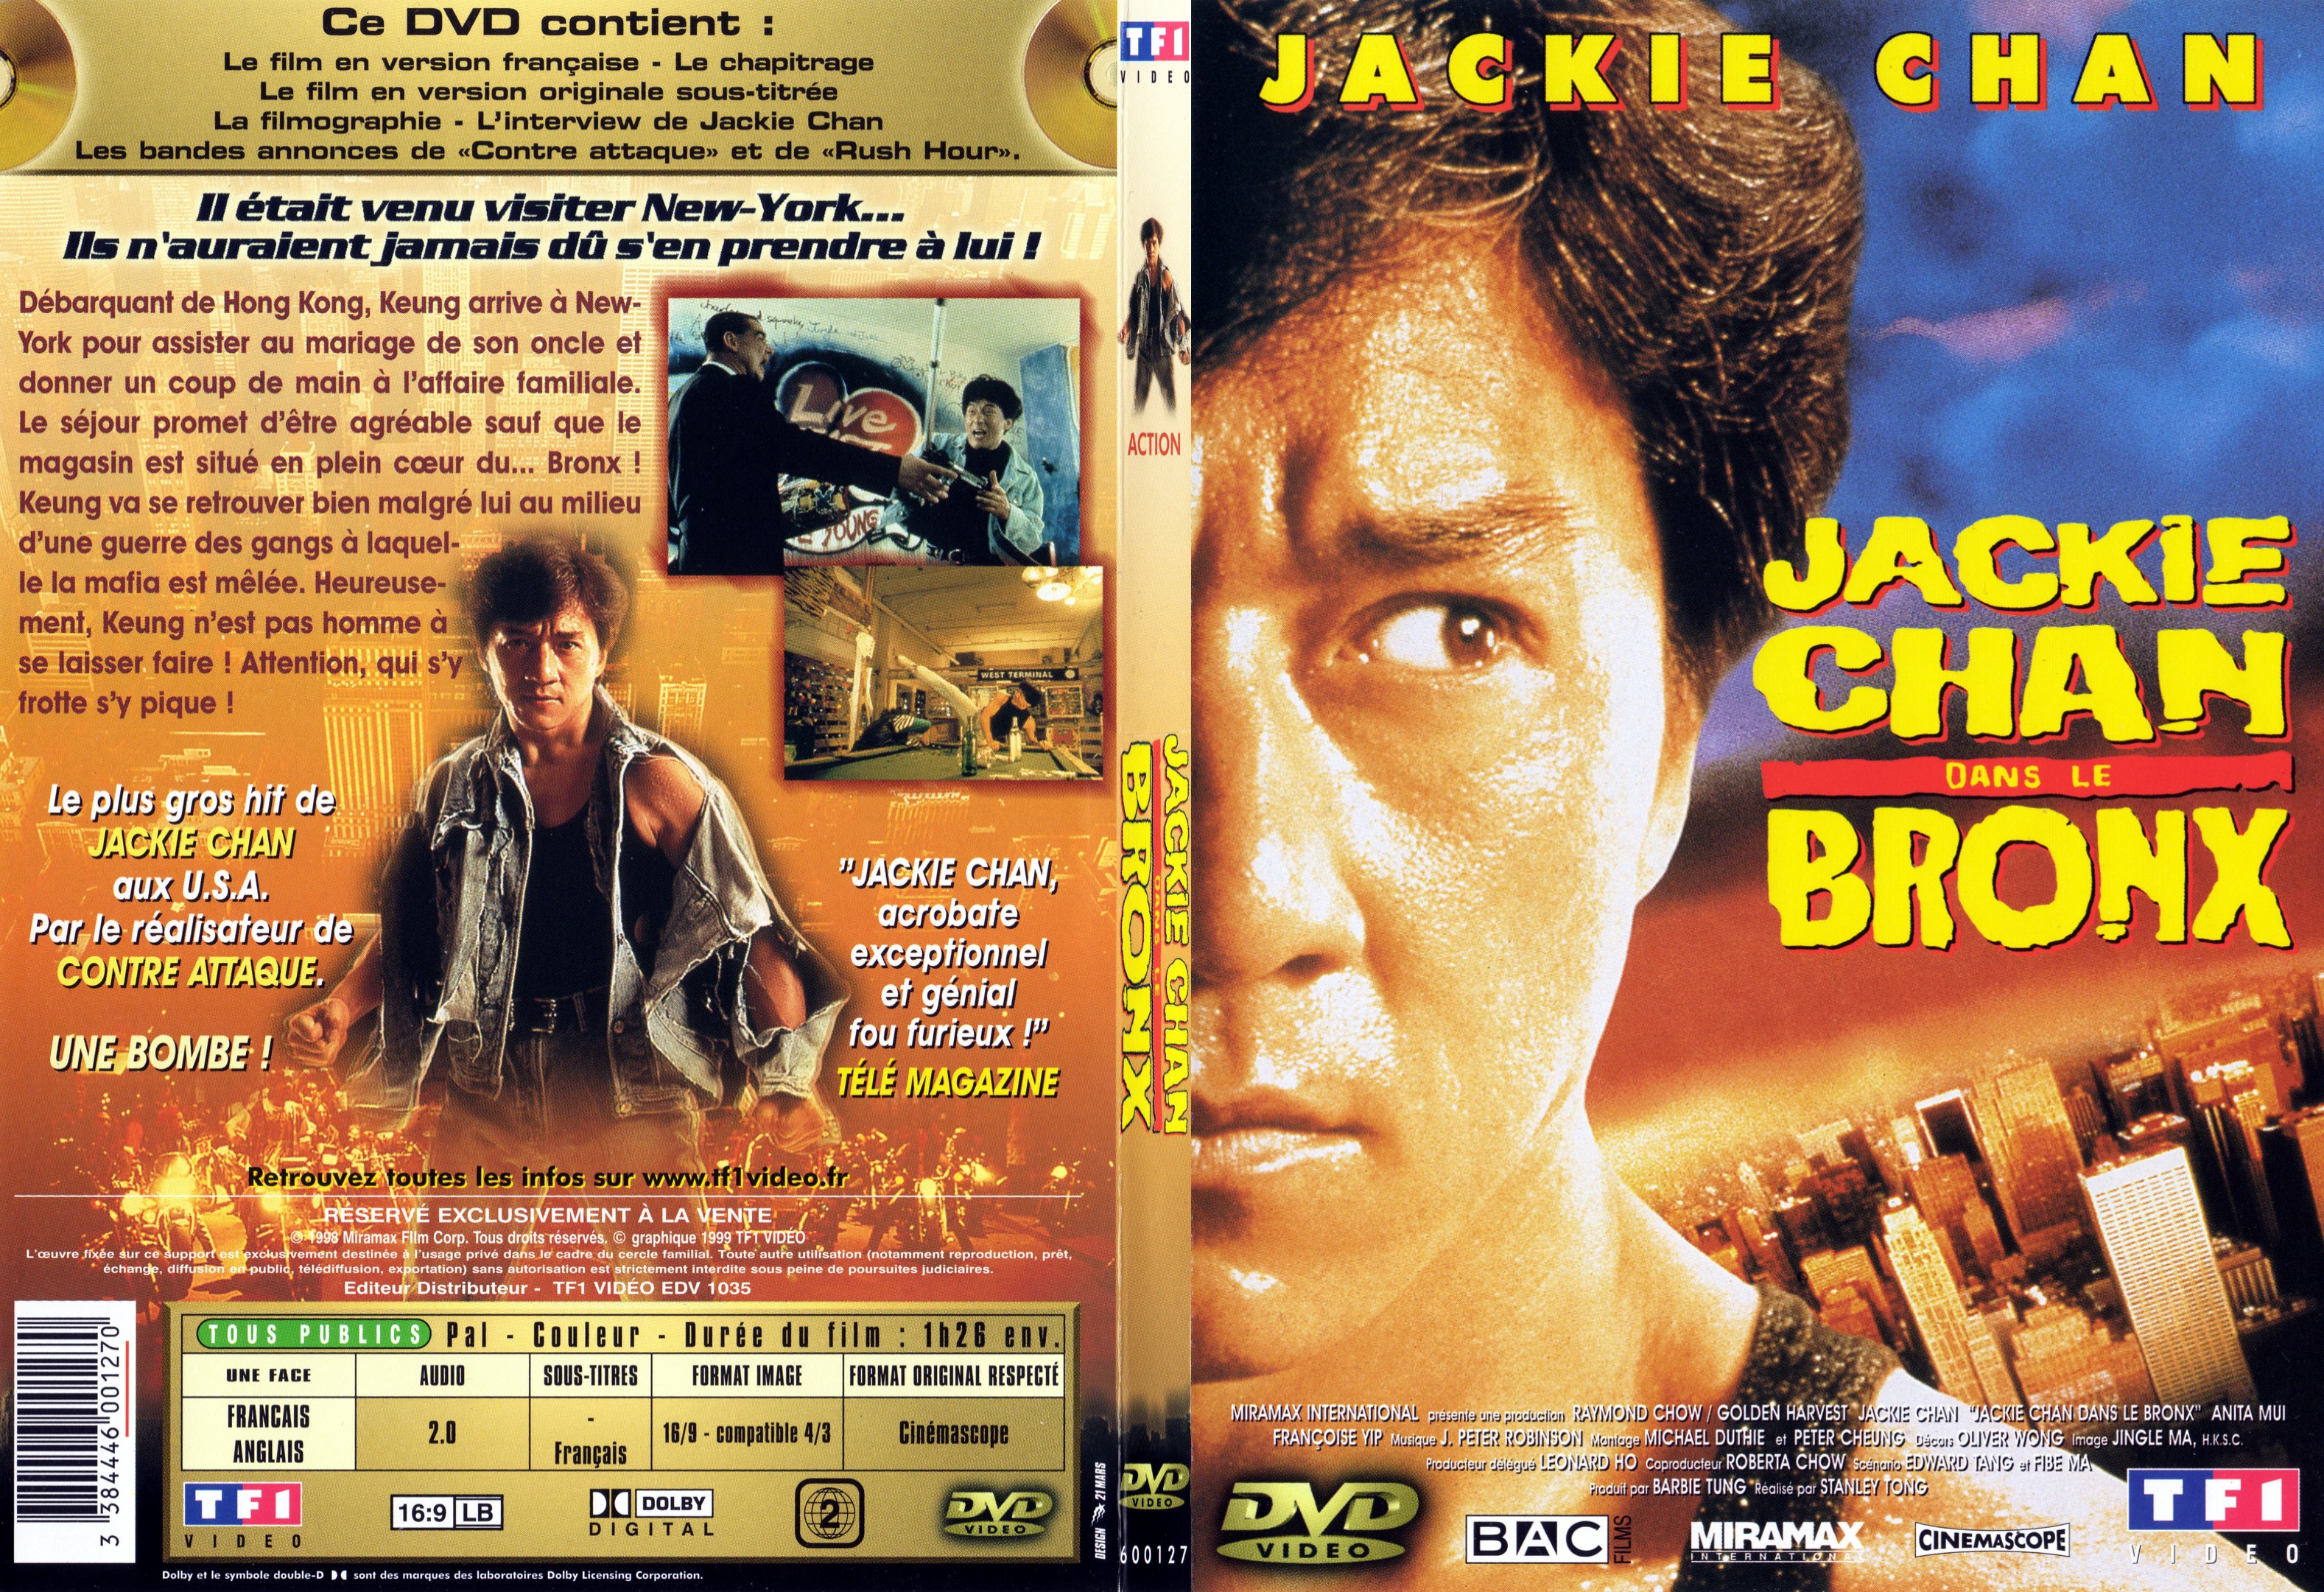 Jaquette DVD Jackie Chan dans le Bronx - SLIM v2